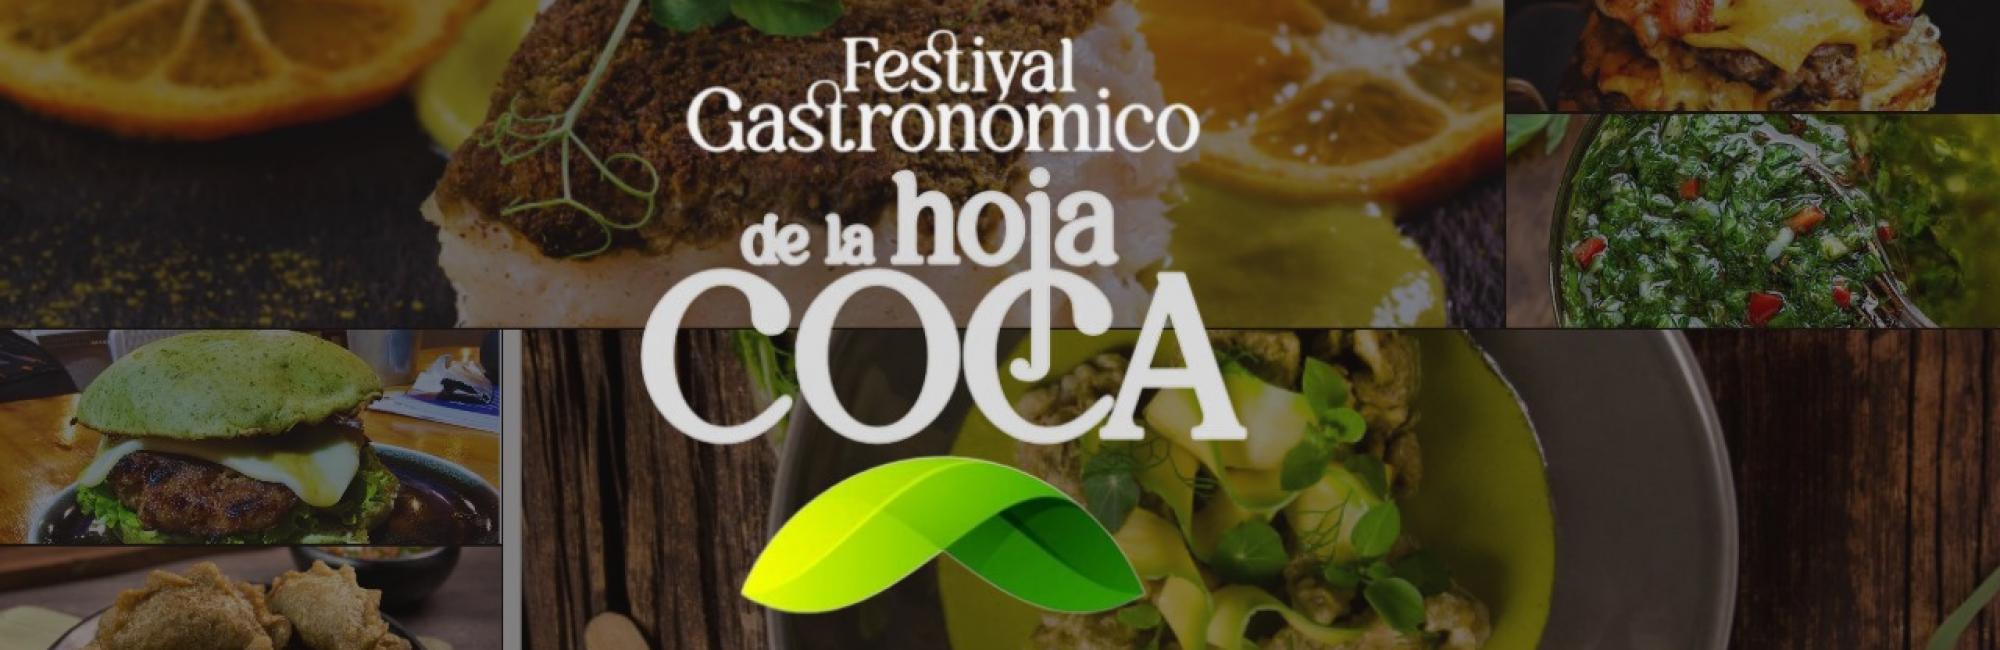 Festival Gatronomico de la Hoja Coca 